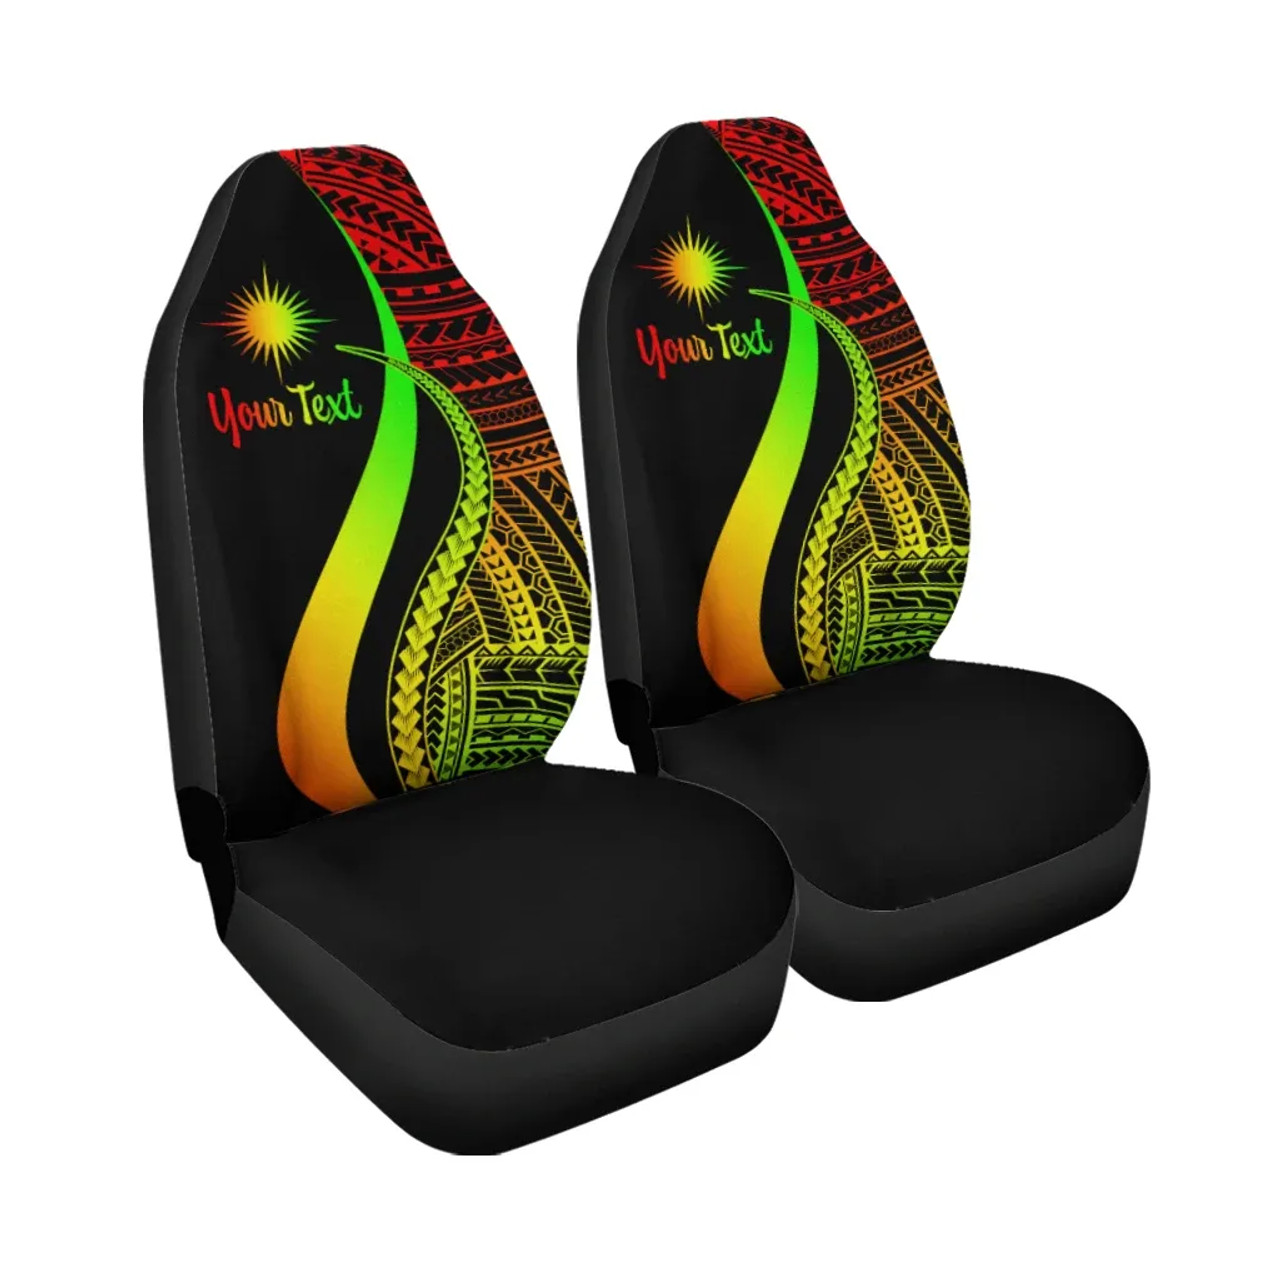 Marshall Islands Custom Personalised Car Seat Covers - Reggae Polynesian Tentacle Tribal Pattern